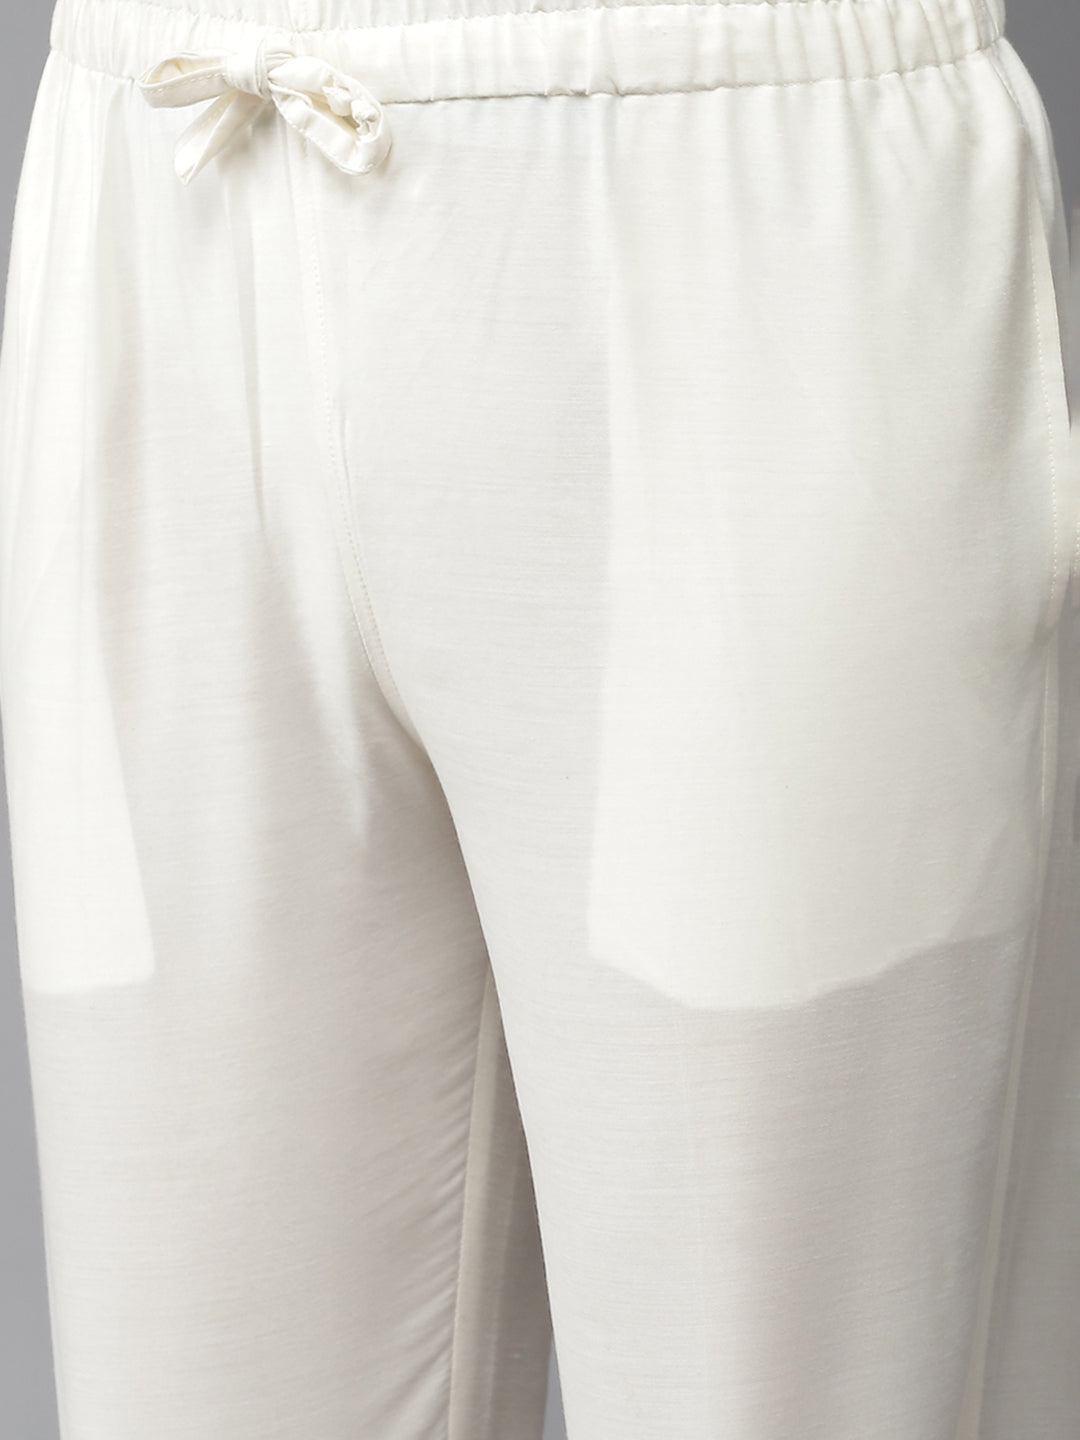 Buy Men's Off-White Silk Jacquard Woven Design Kurta Pajama Jacket Set Online - Front